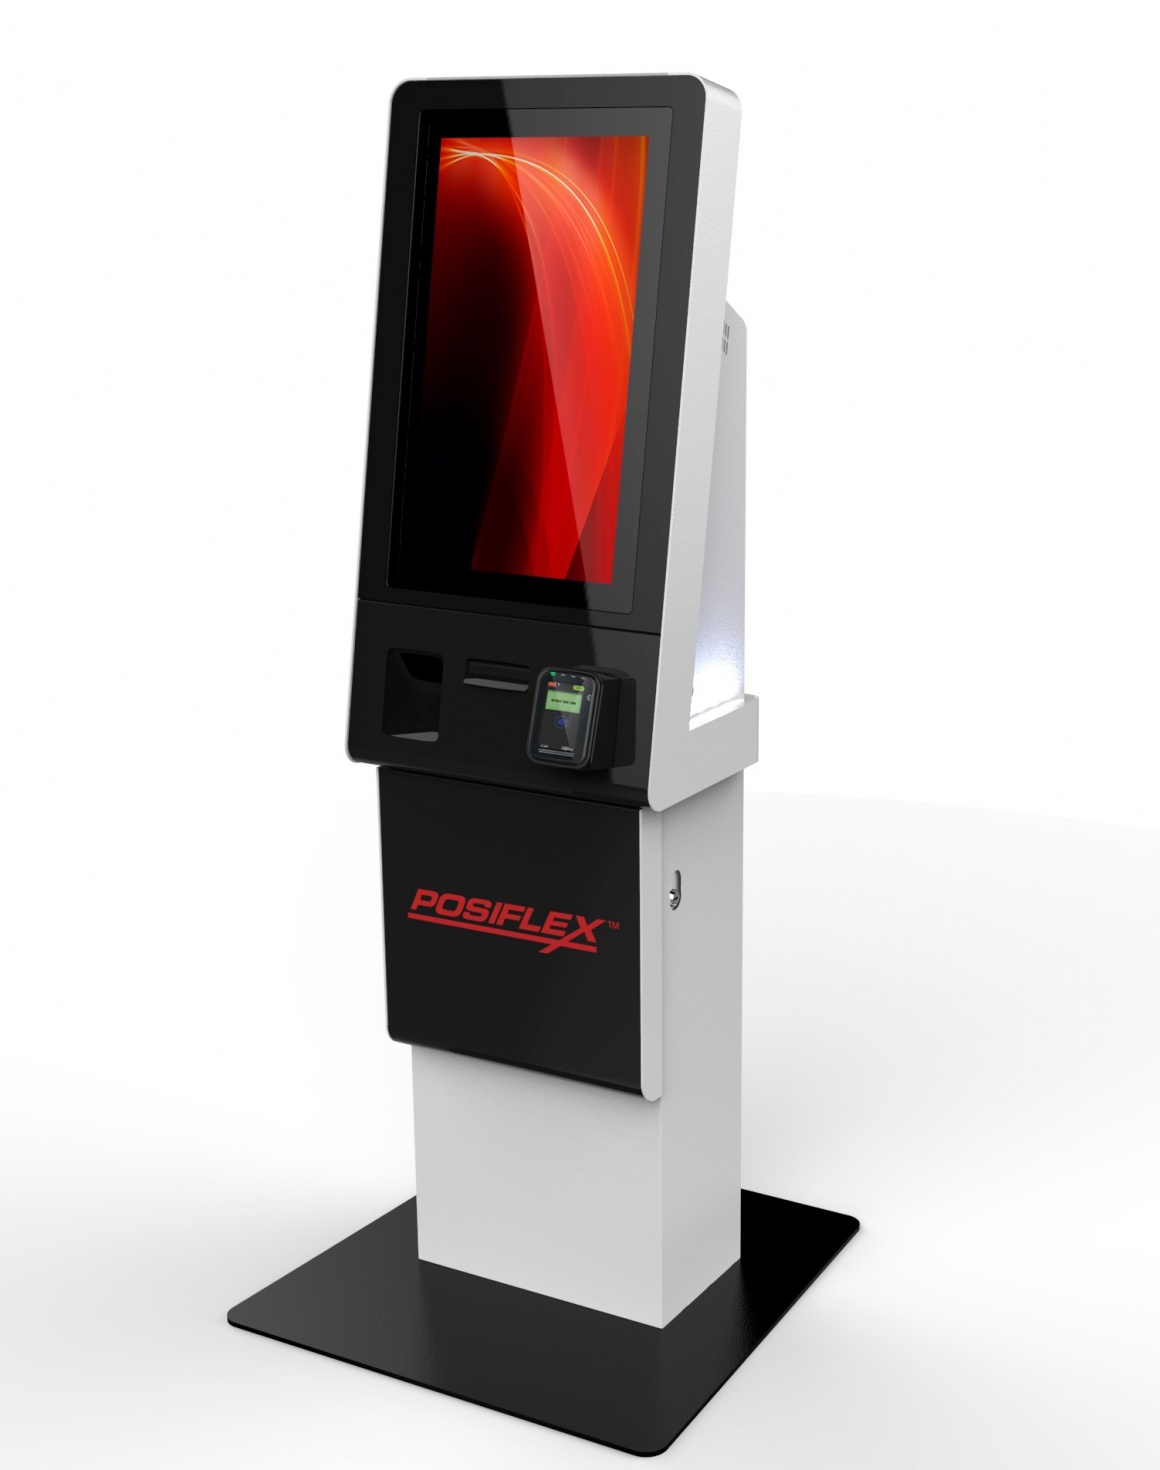 The Posiflex KK-2130 series self-service kiosk.